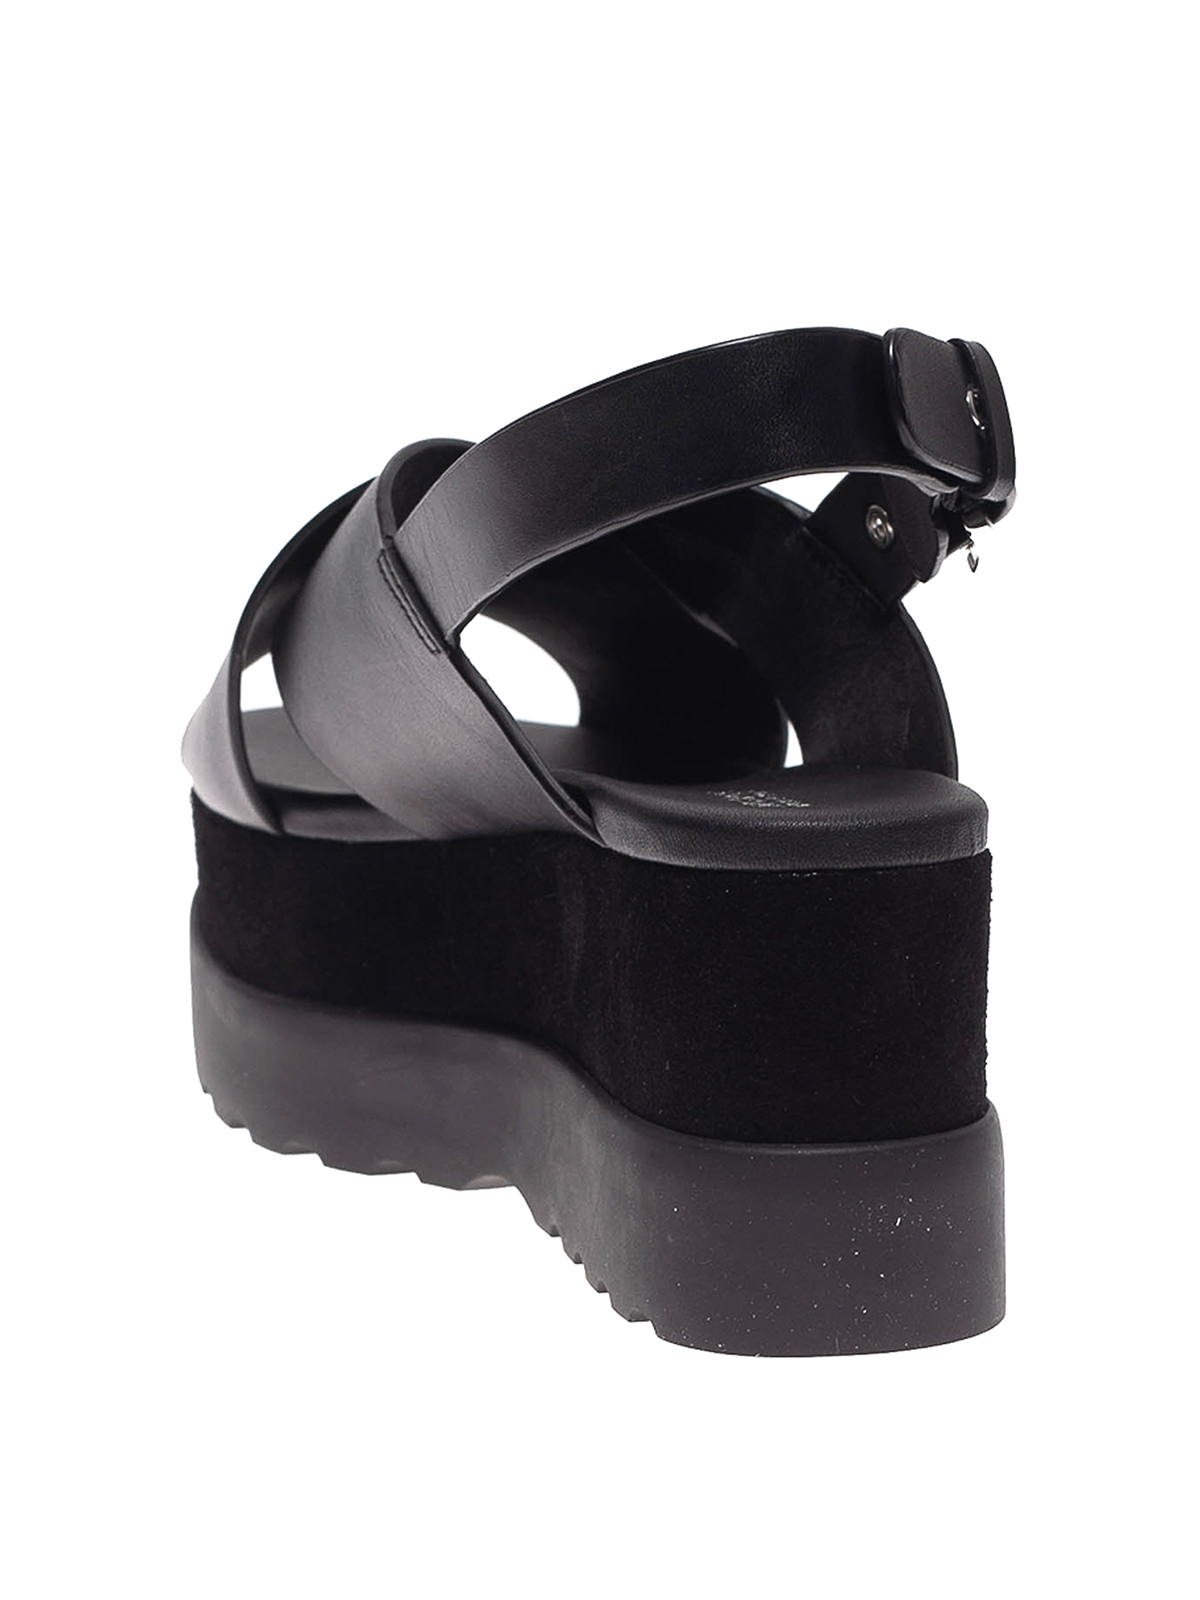 Sandals Michael Kors - Becker black wedge sandals - 40S0BKFA2L001